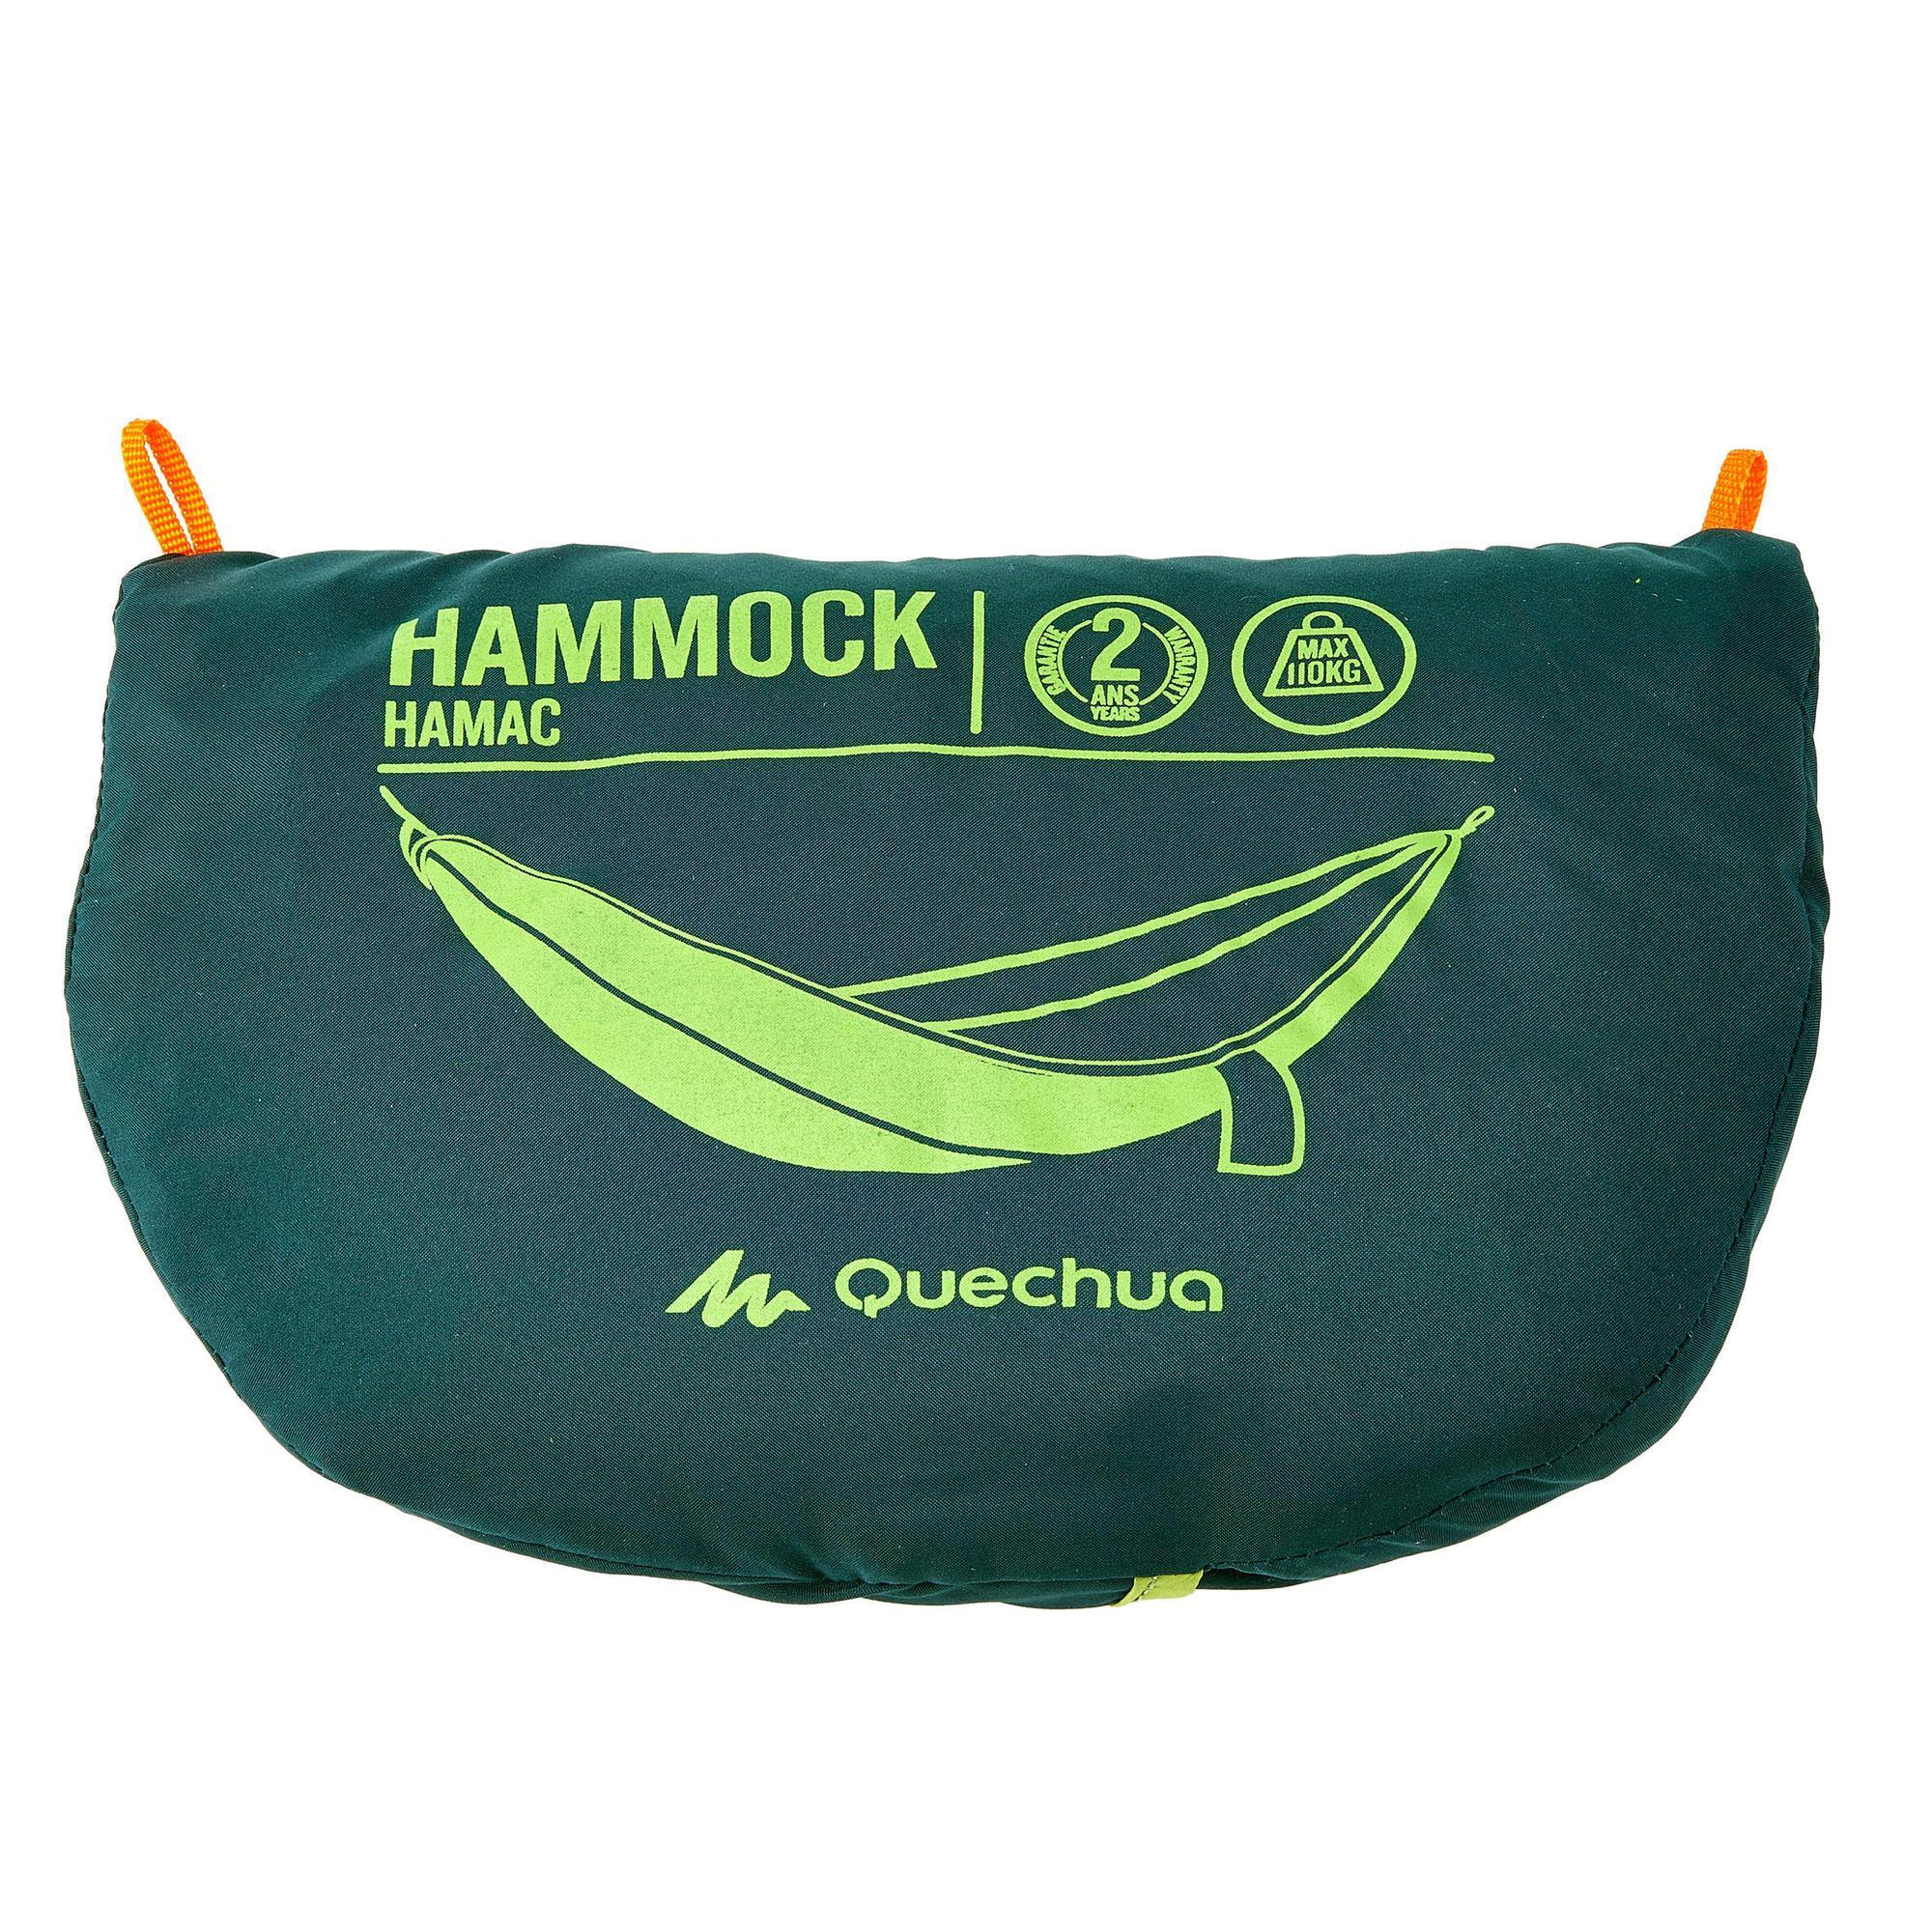 hammock hamac quechua